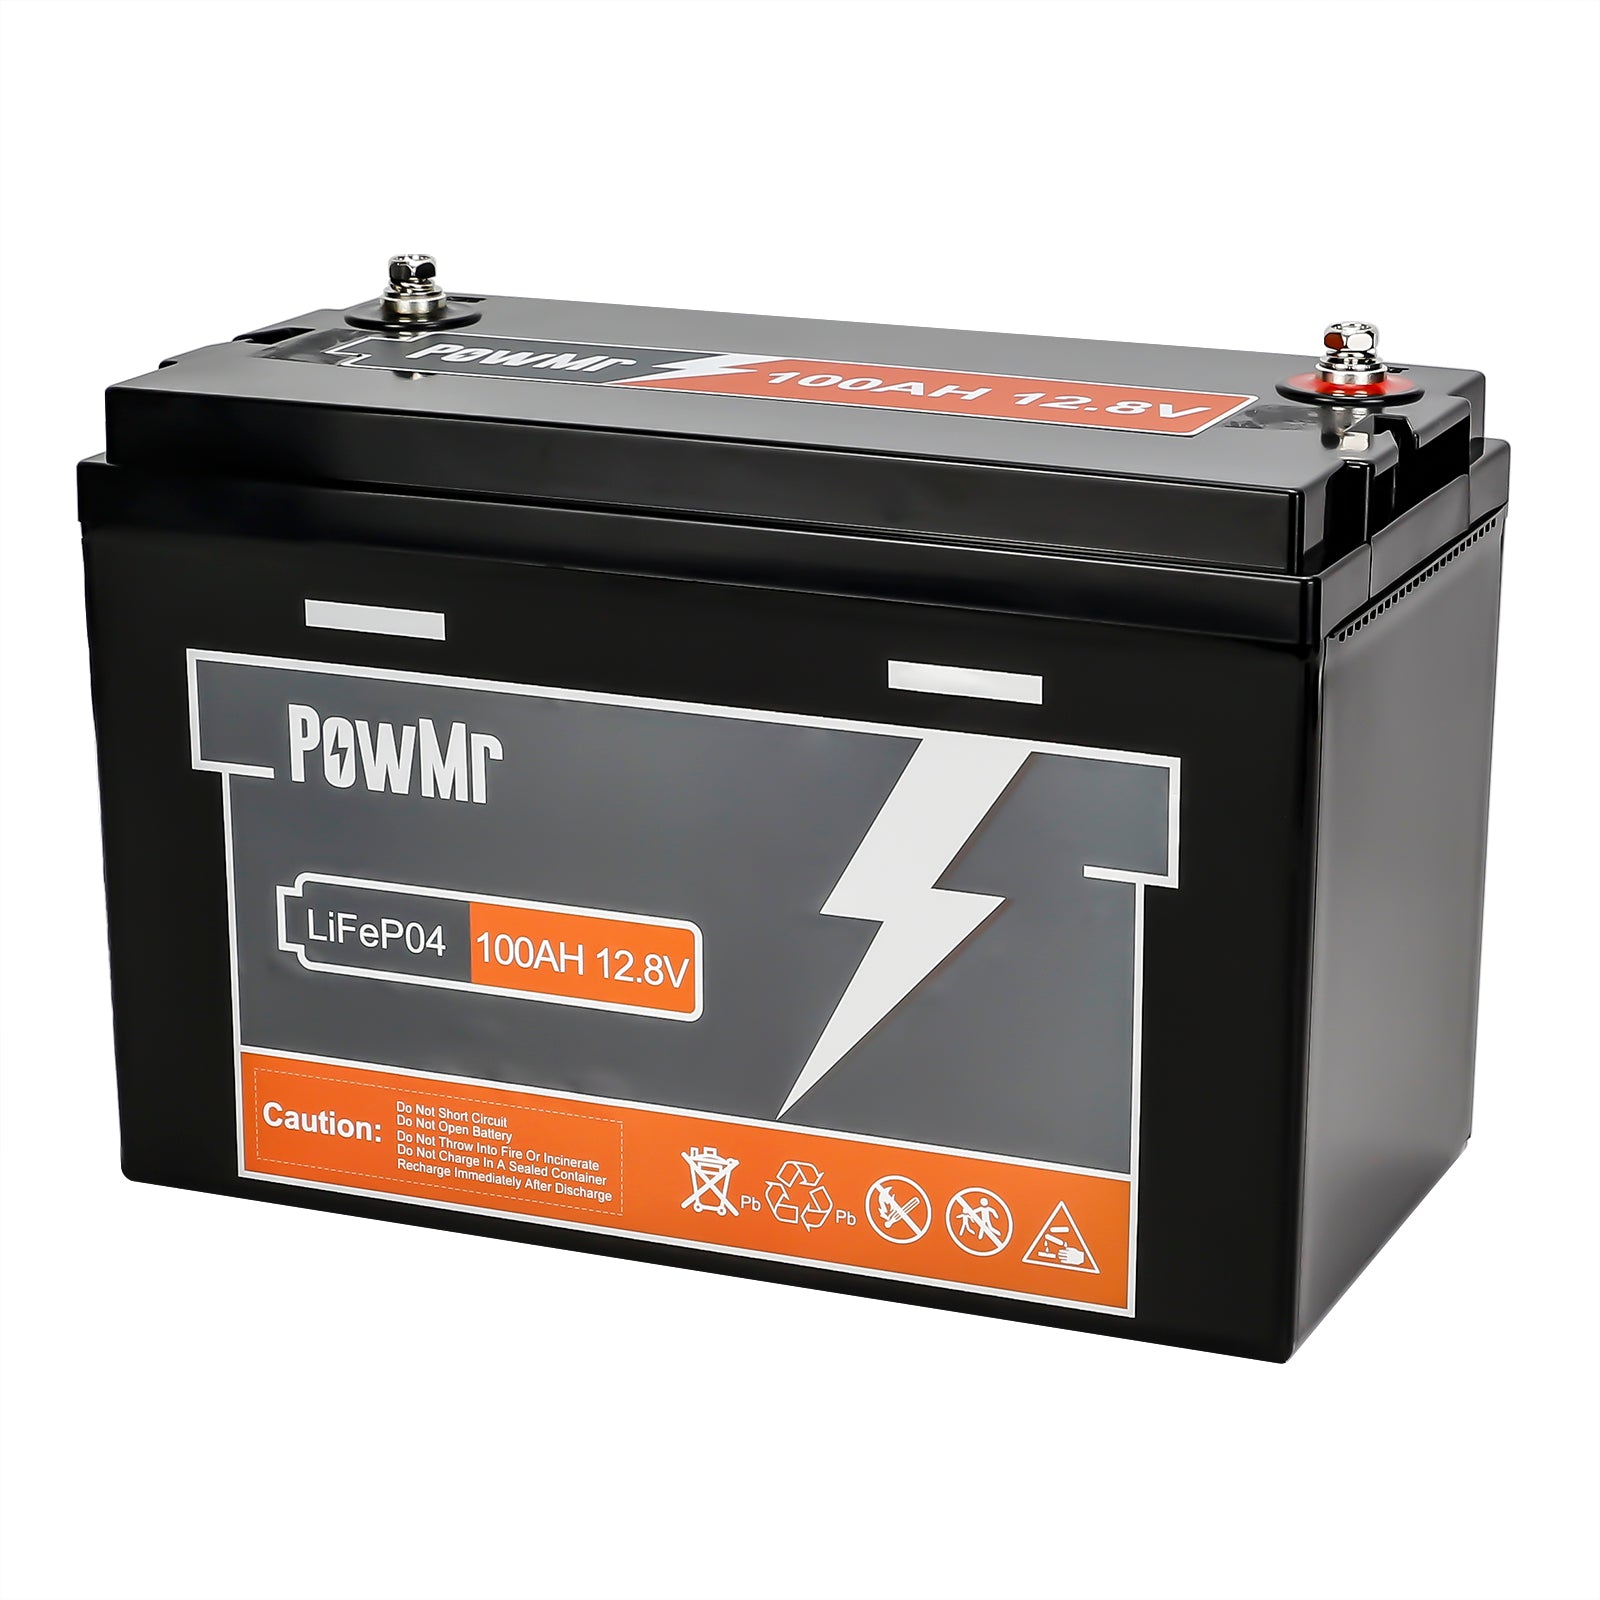 100AH 12.8V Lithium Energy Storage Battery – PowMr